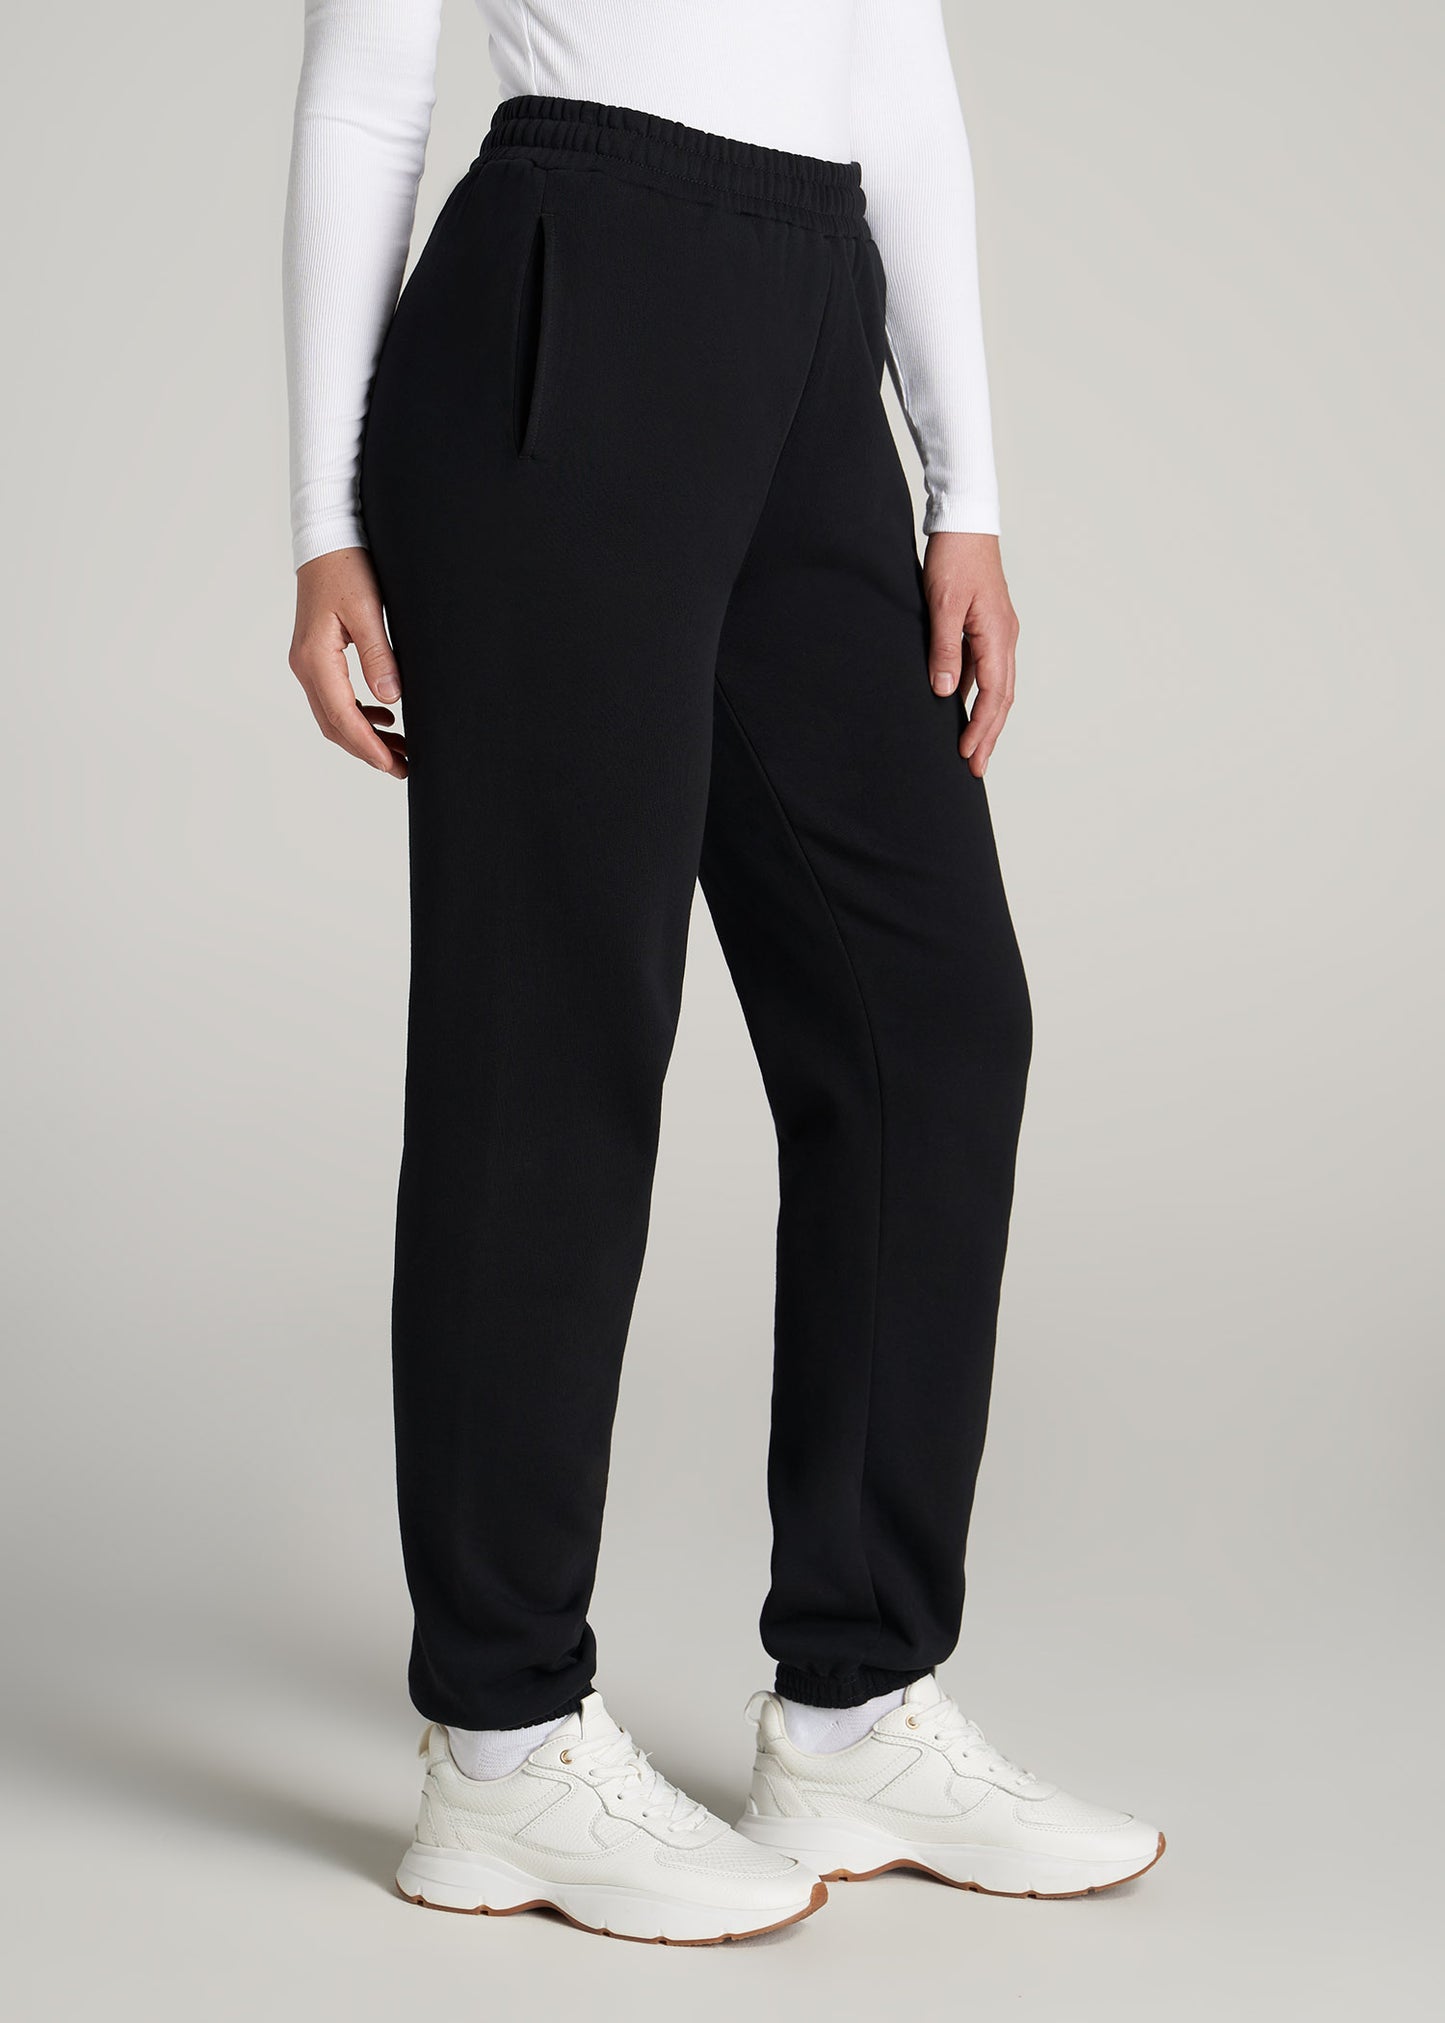 Ardene Crossover Waist Sweatpants in Black, Size, Polyester/Cotton, Fleece-Lined